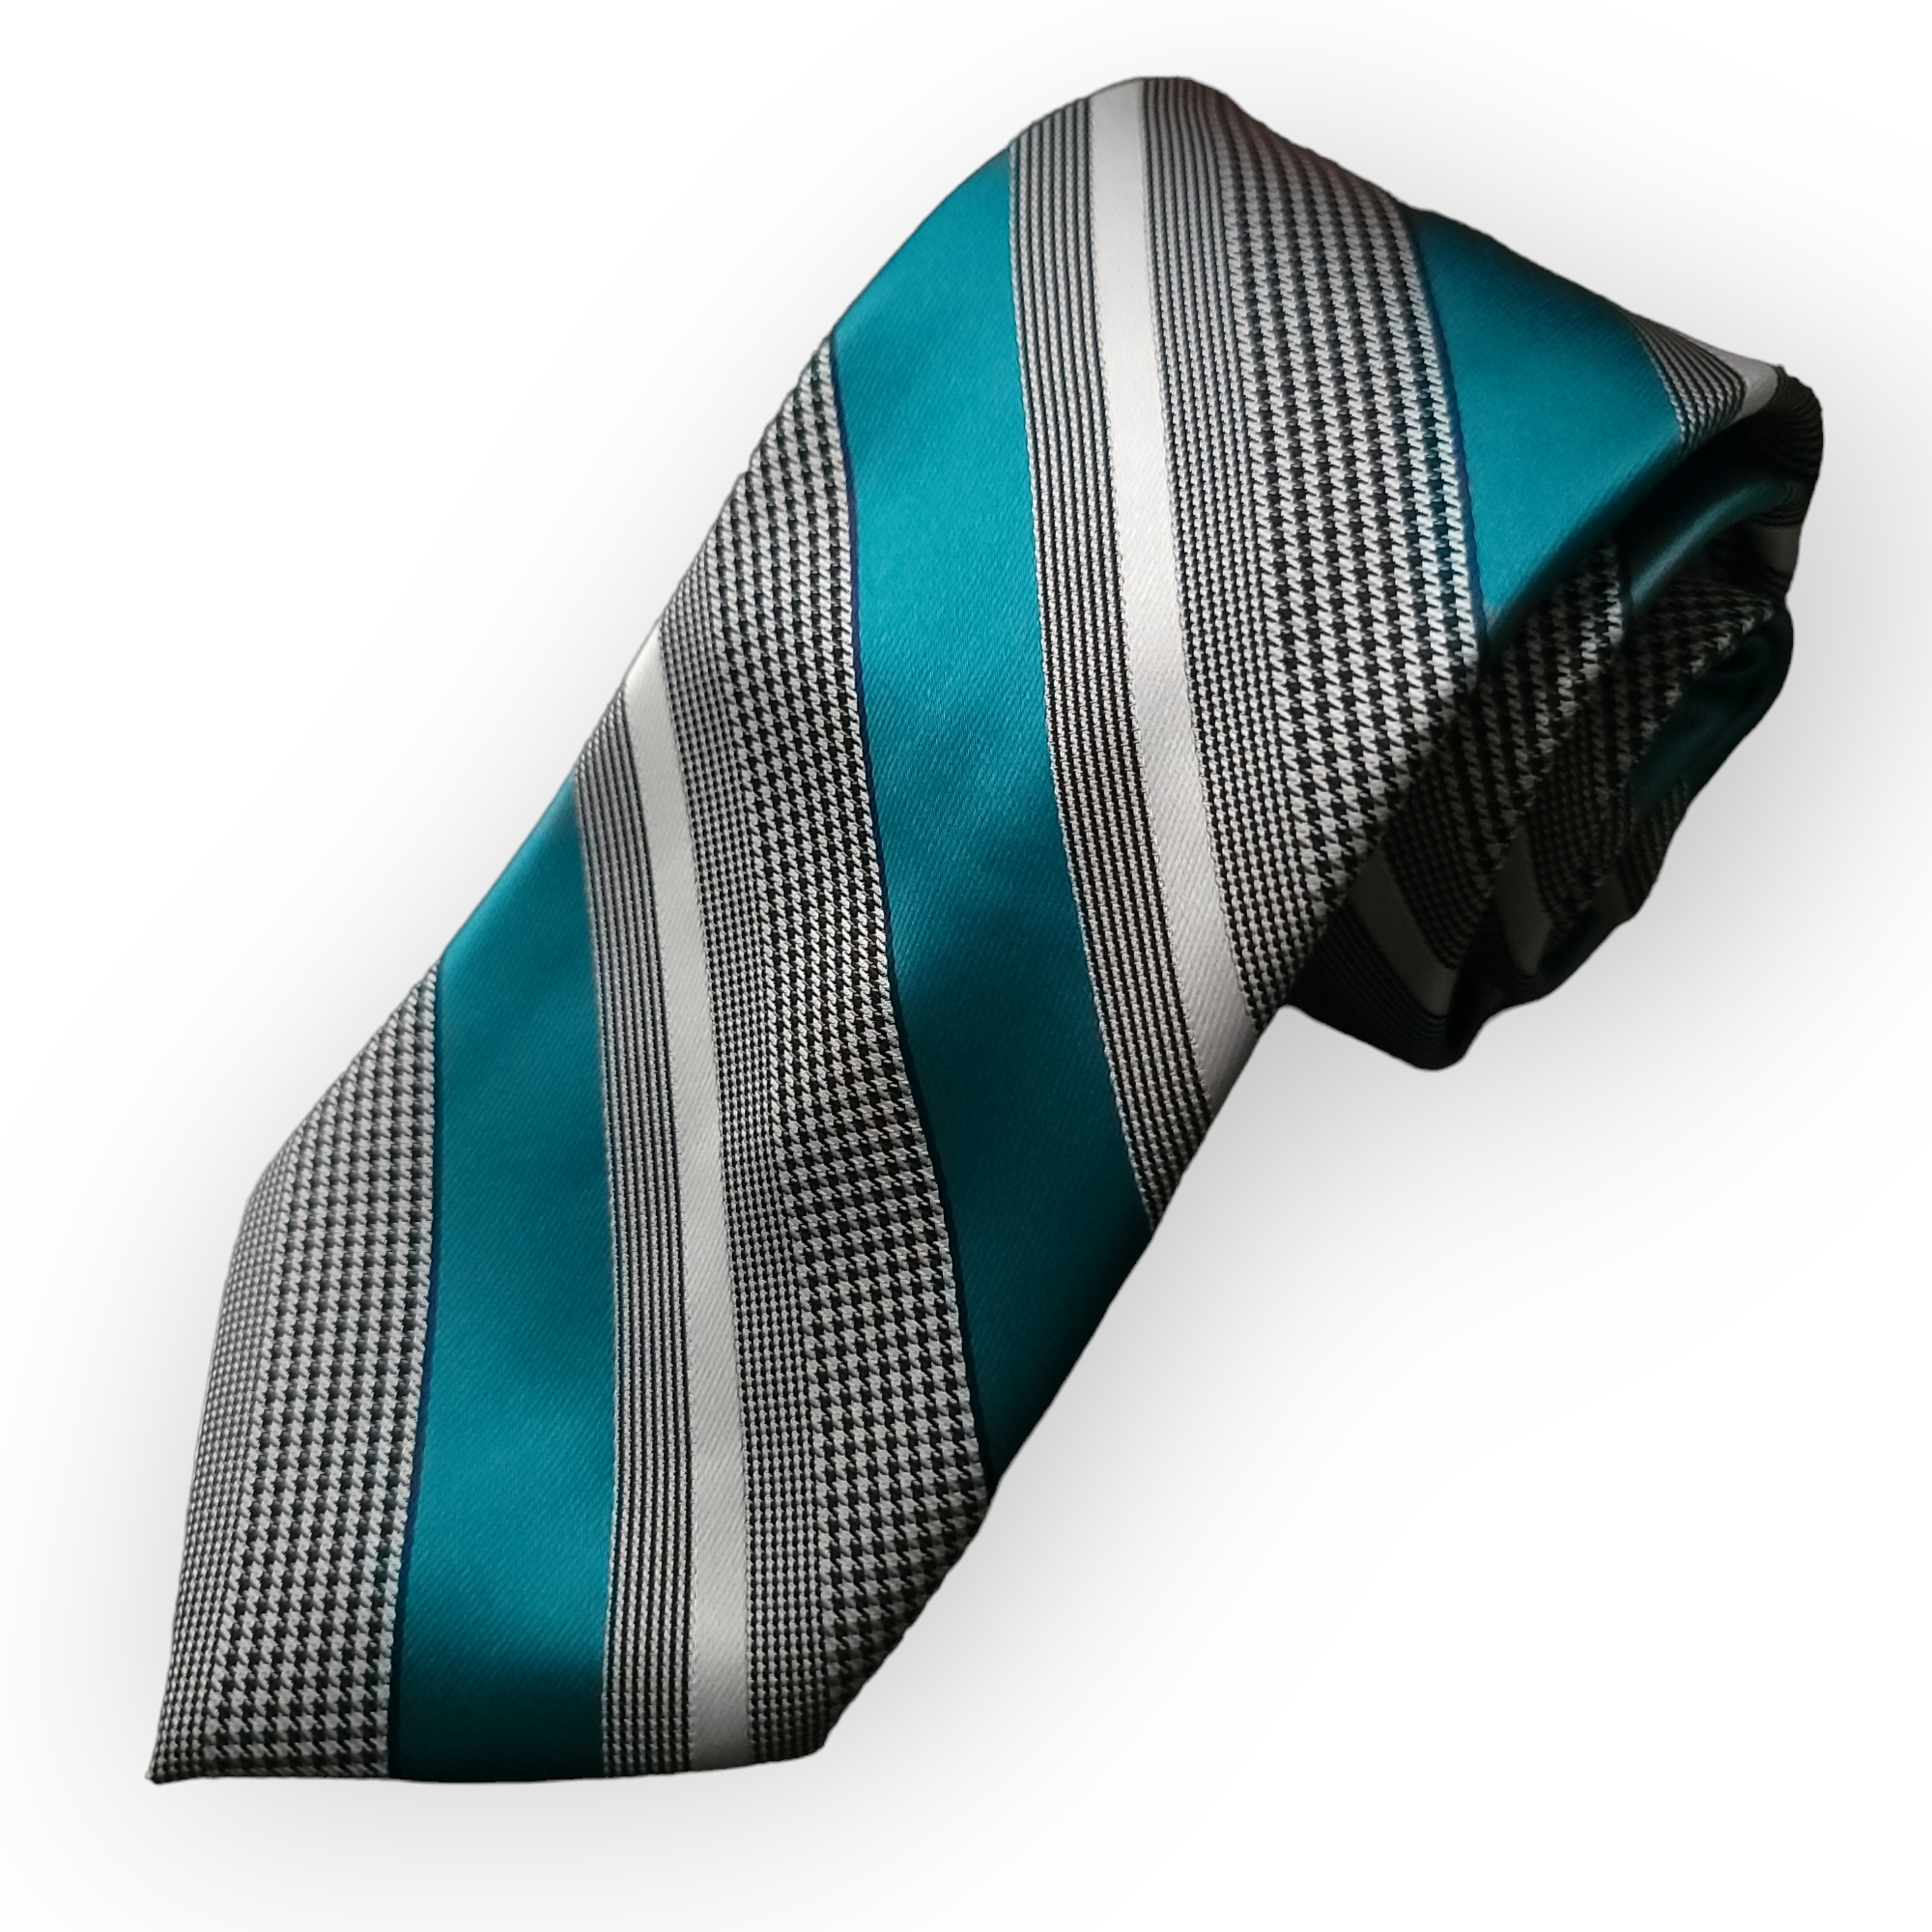 Teal Blue White Striped Tie Pocket Square Cufflinks Set